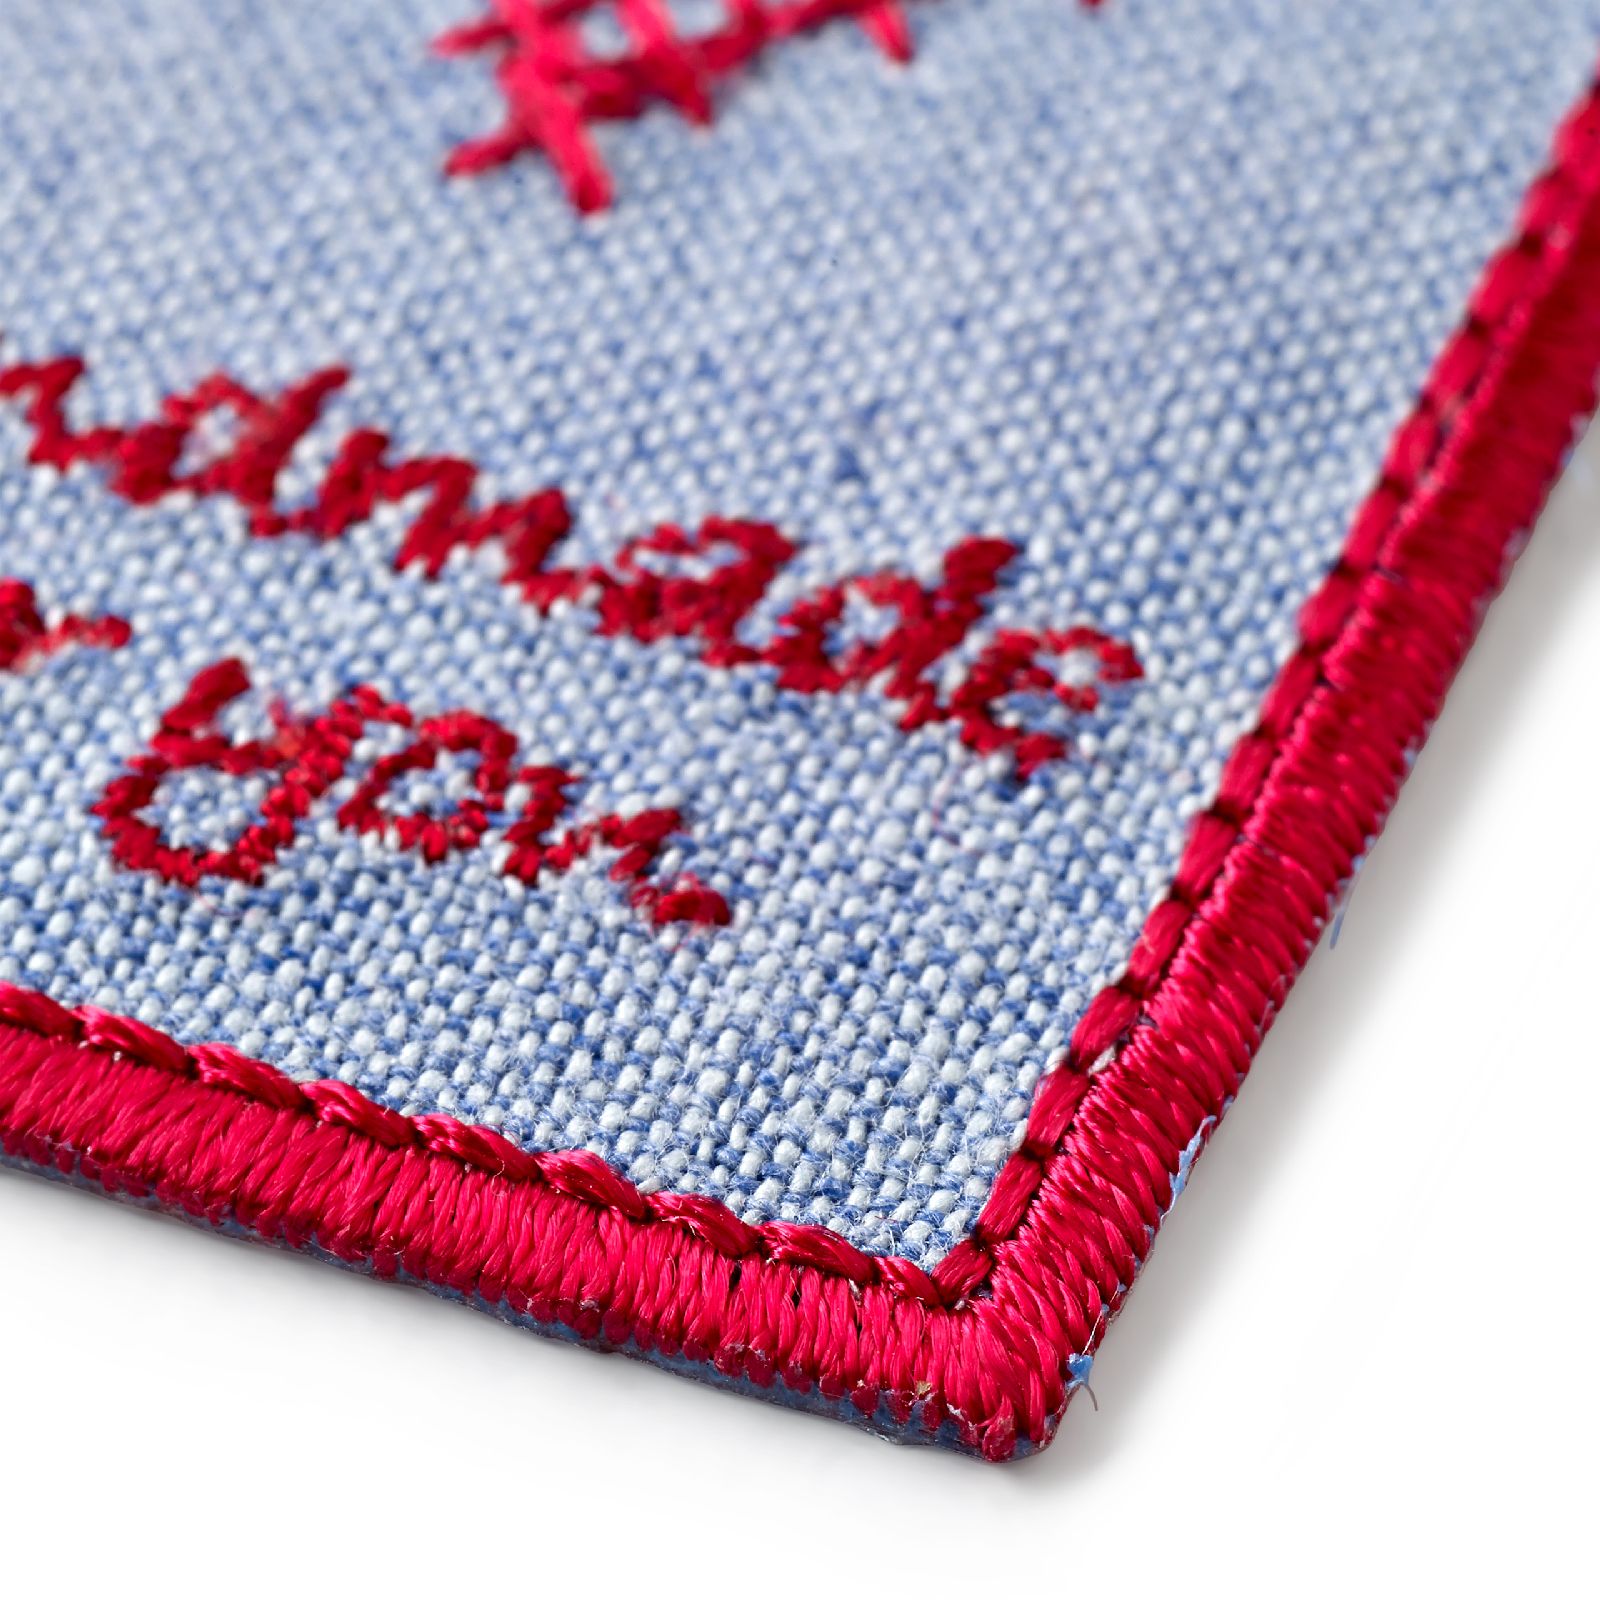 Applikation - aufbügelbar, Exklusiv Handmade Label Sticken blau/rot  35 x 50 mm, 1 Stück 